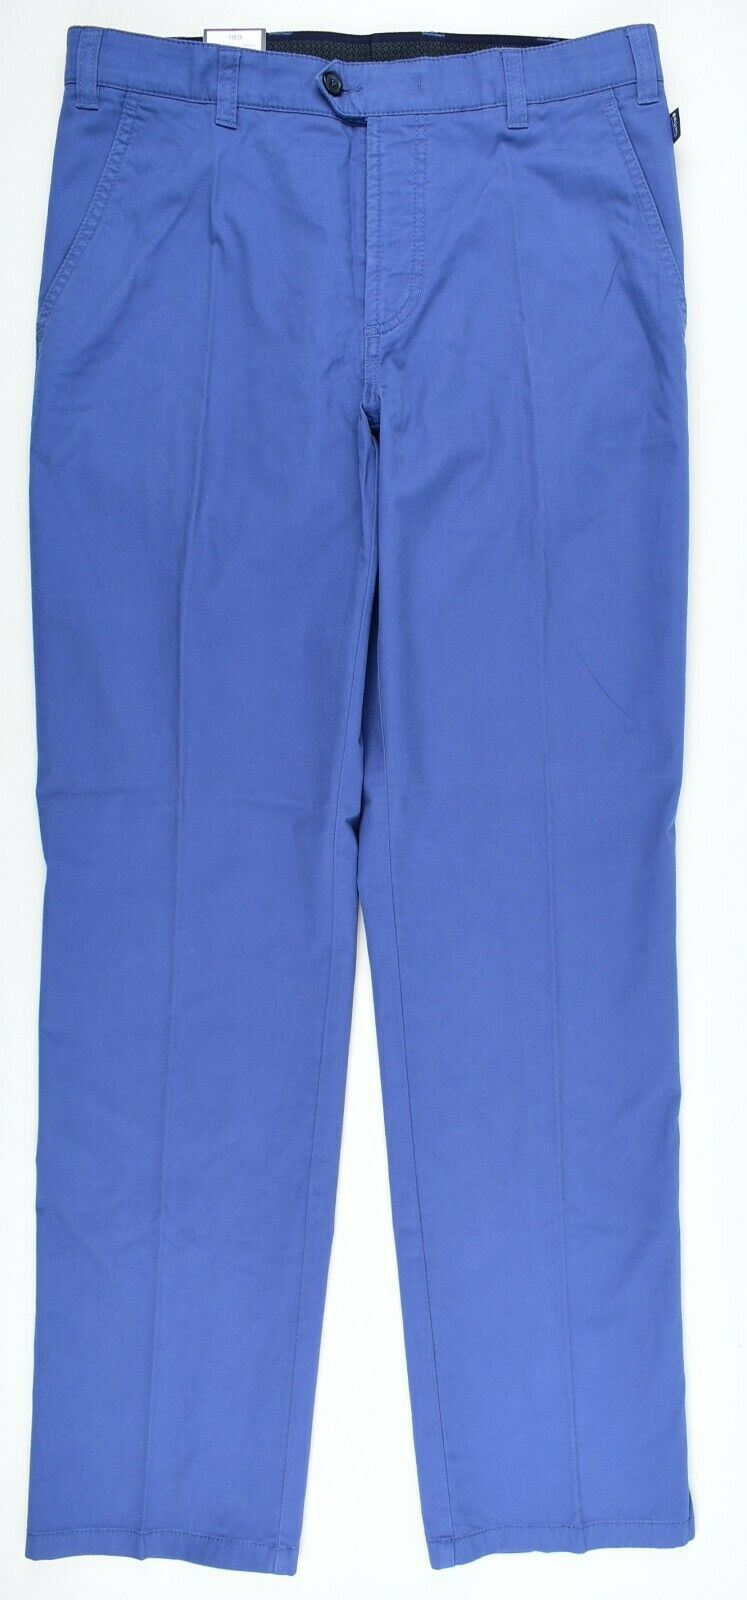 BRUHL Men's VENICE Casual Trousers Chino Pants, Blue, size W32 / EU 48